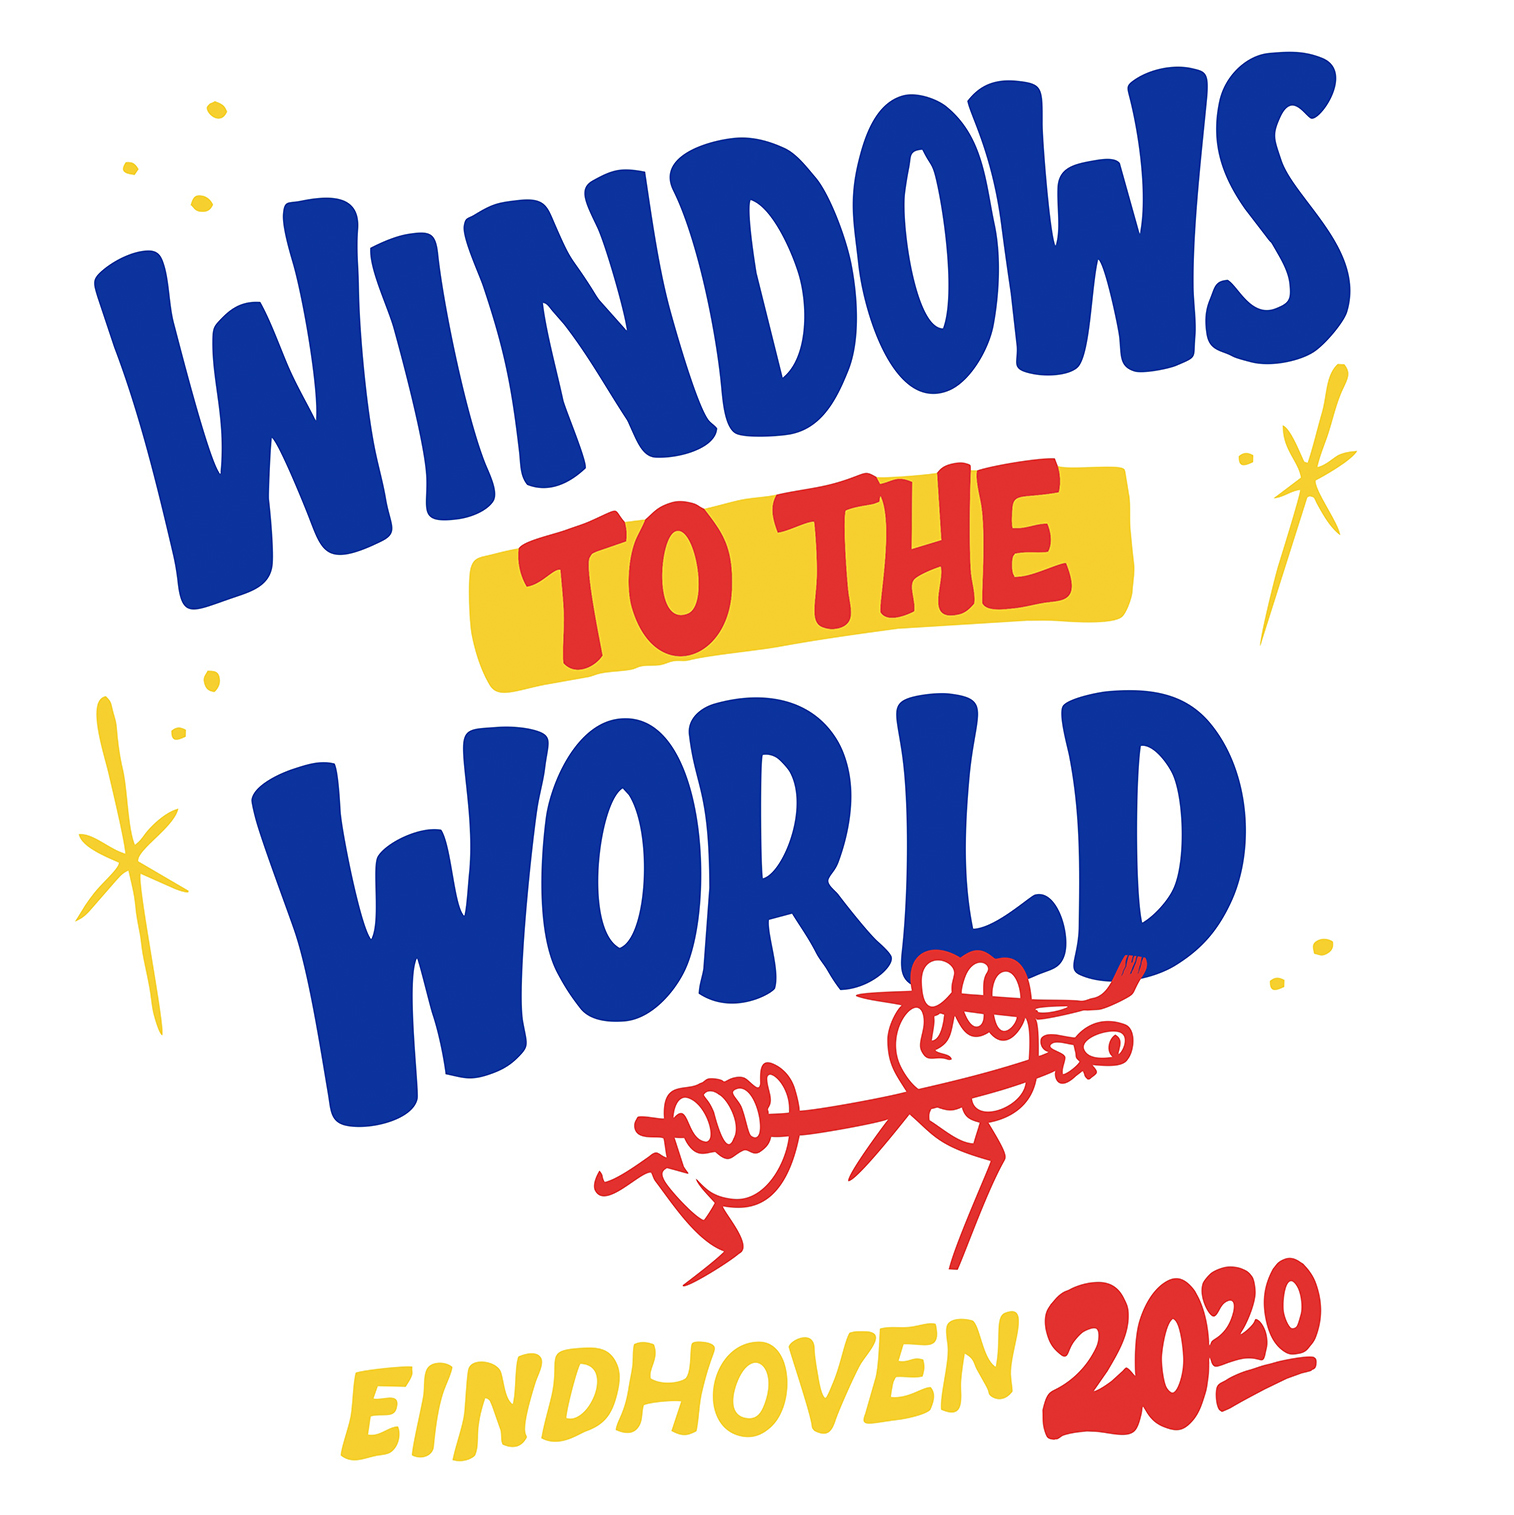 Your windows world